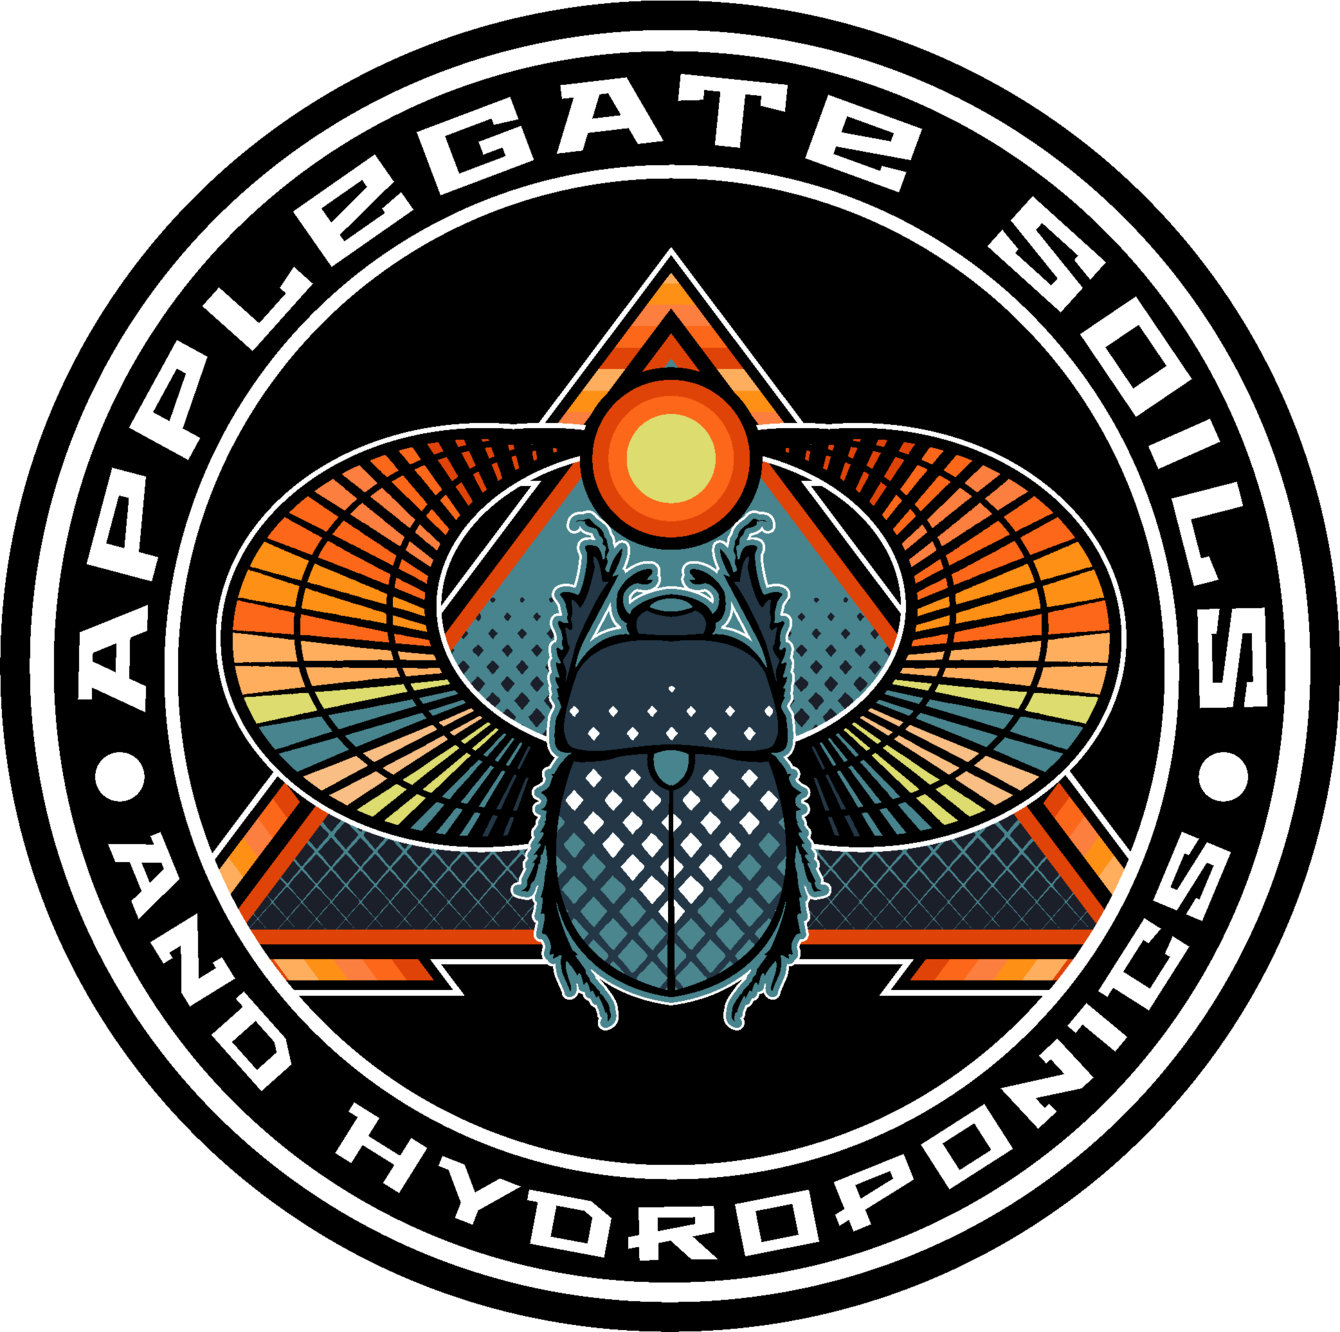 Applegate Soils & Hydroponics Inc